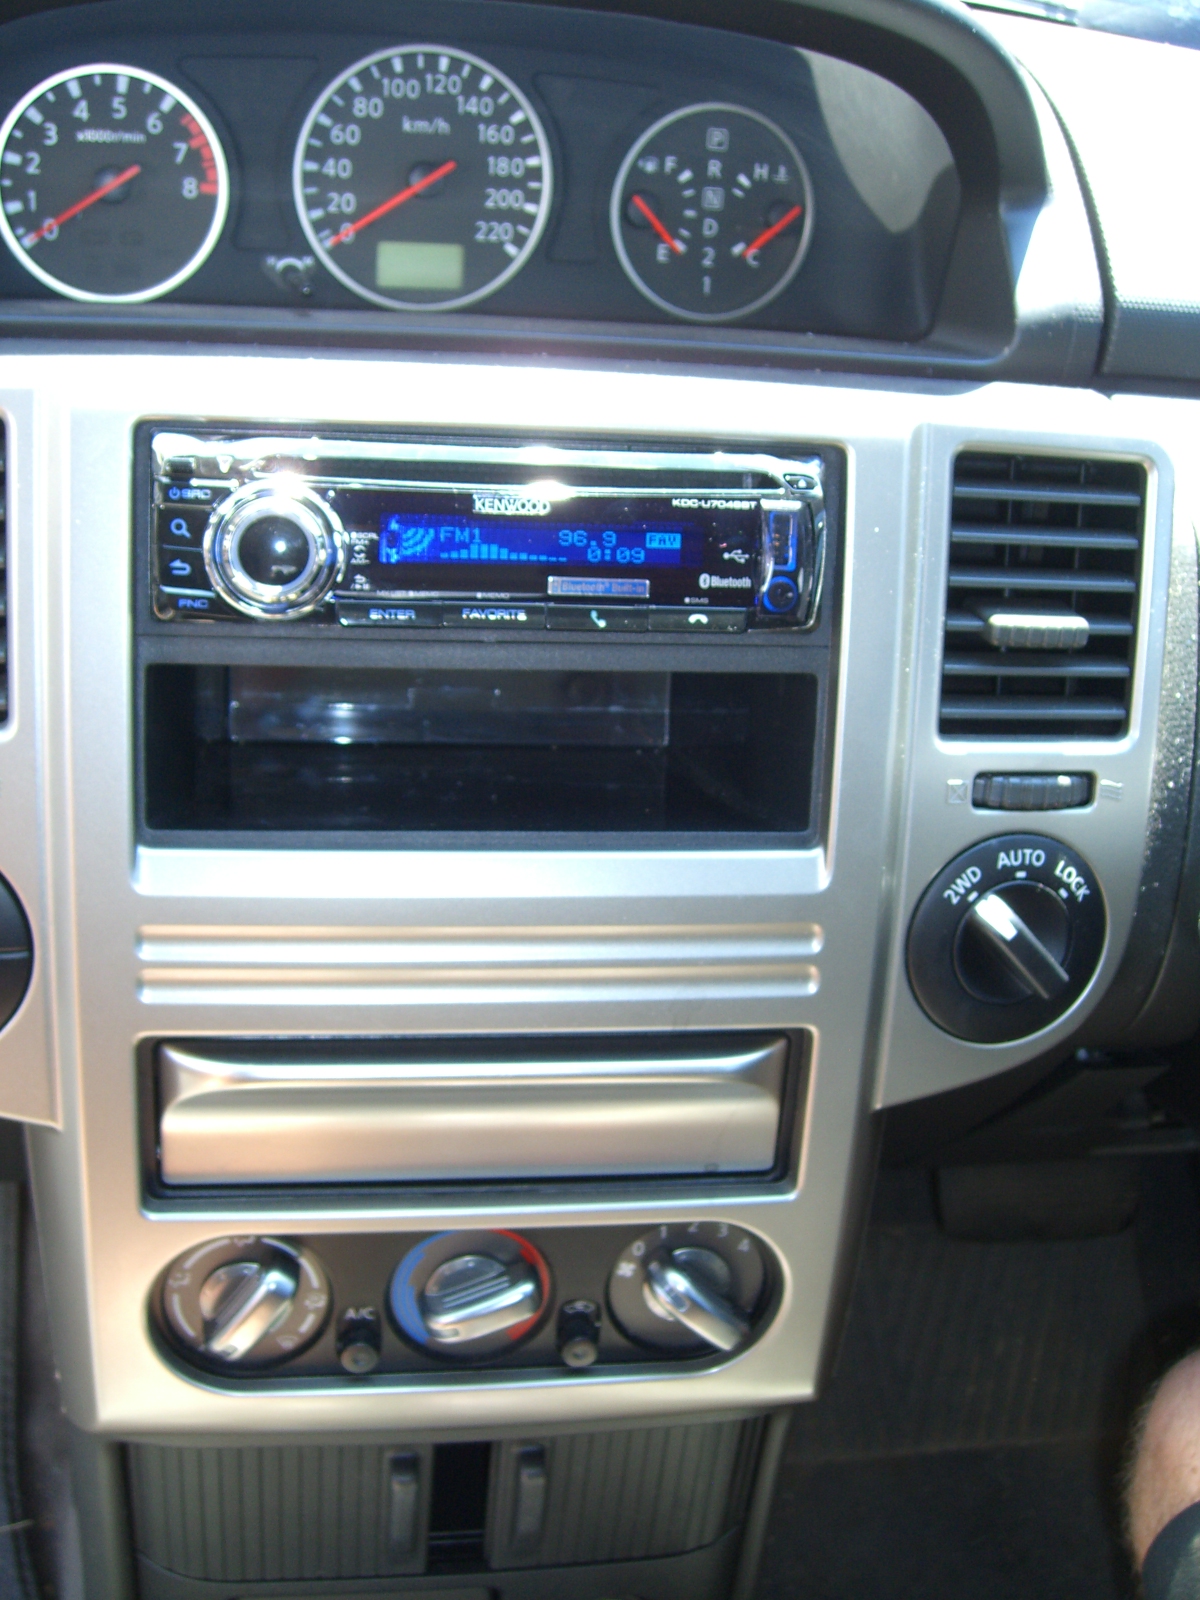 Nissan X-trail Kenwood CD radio with Bluetooth install